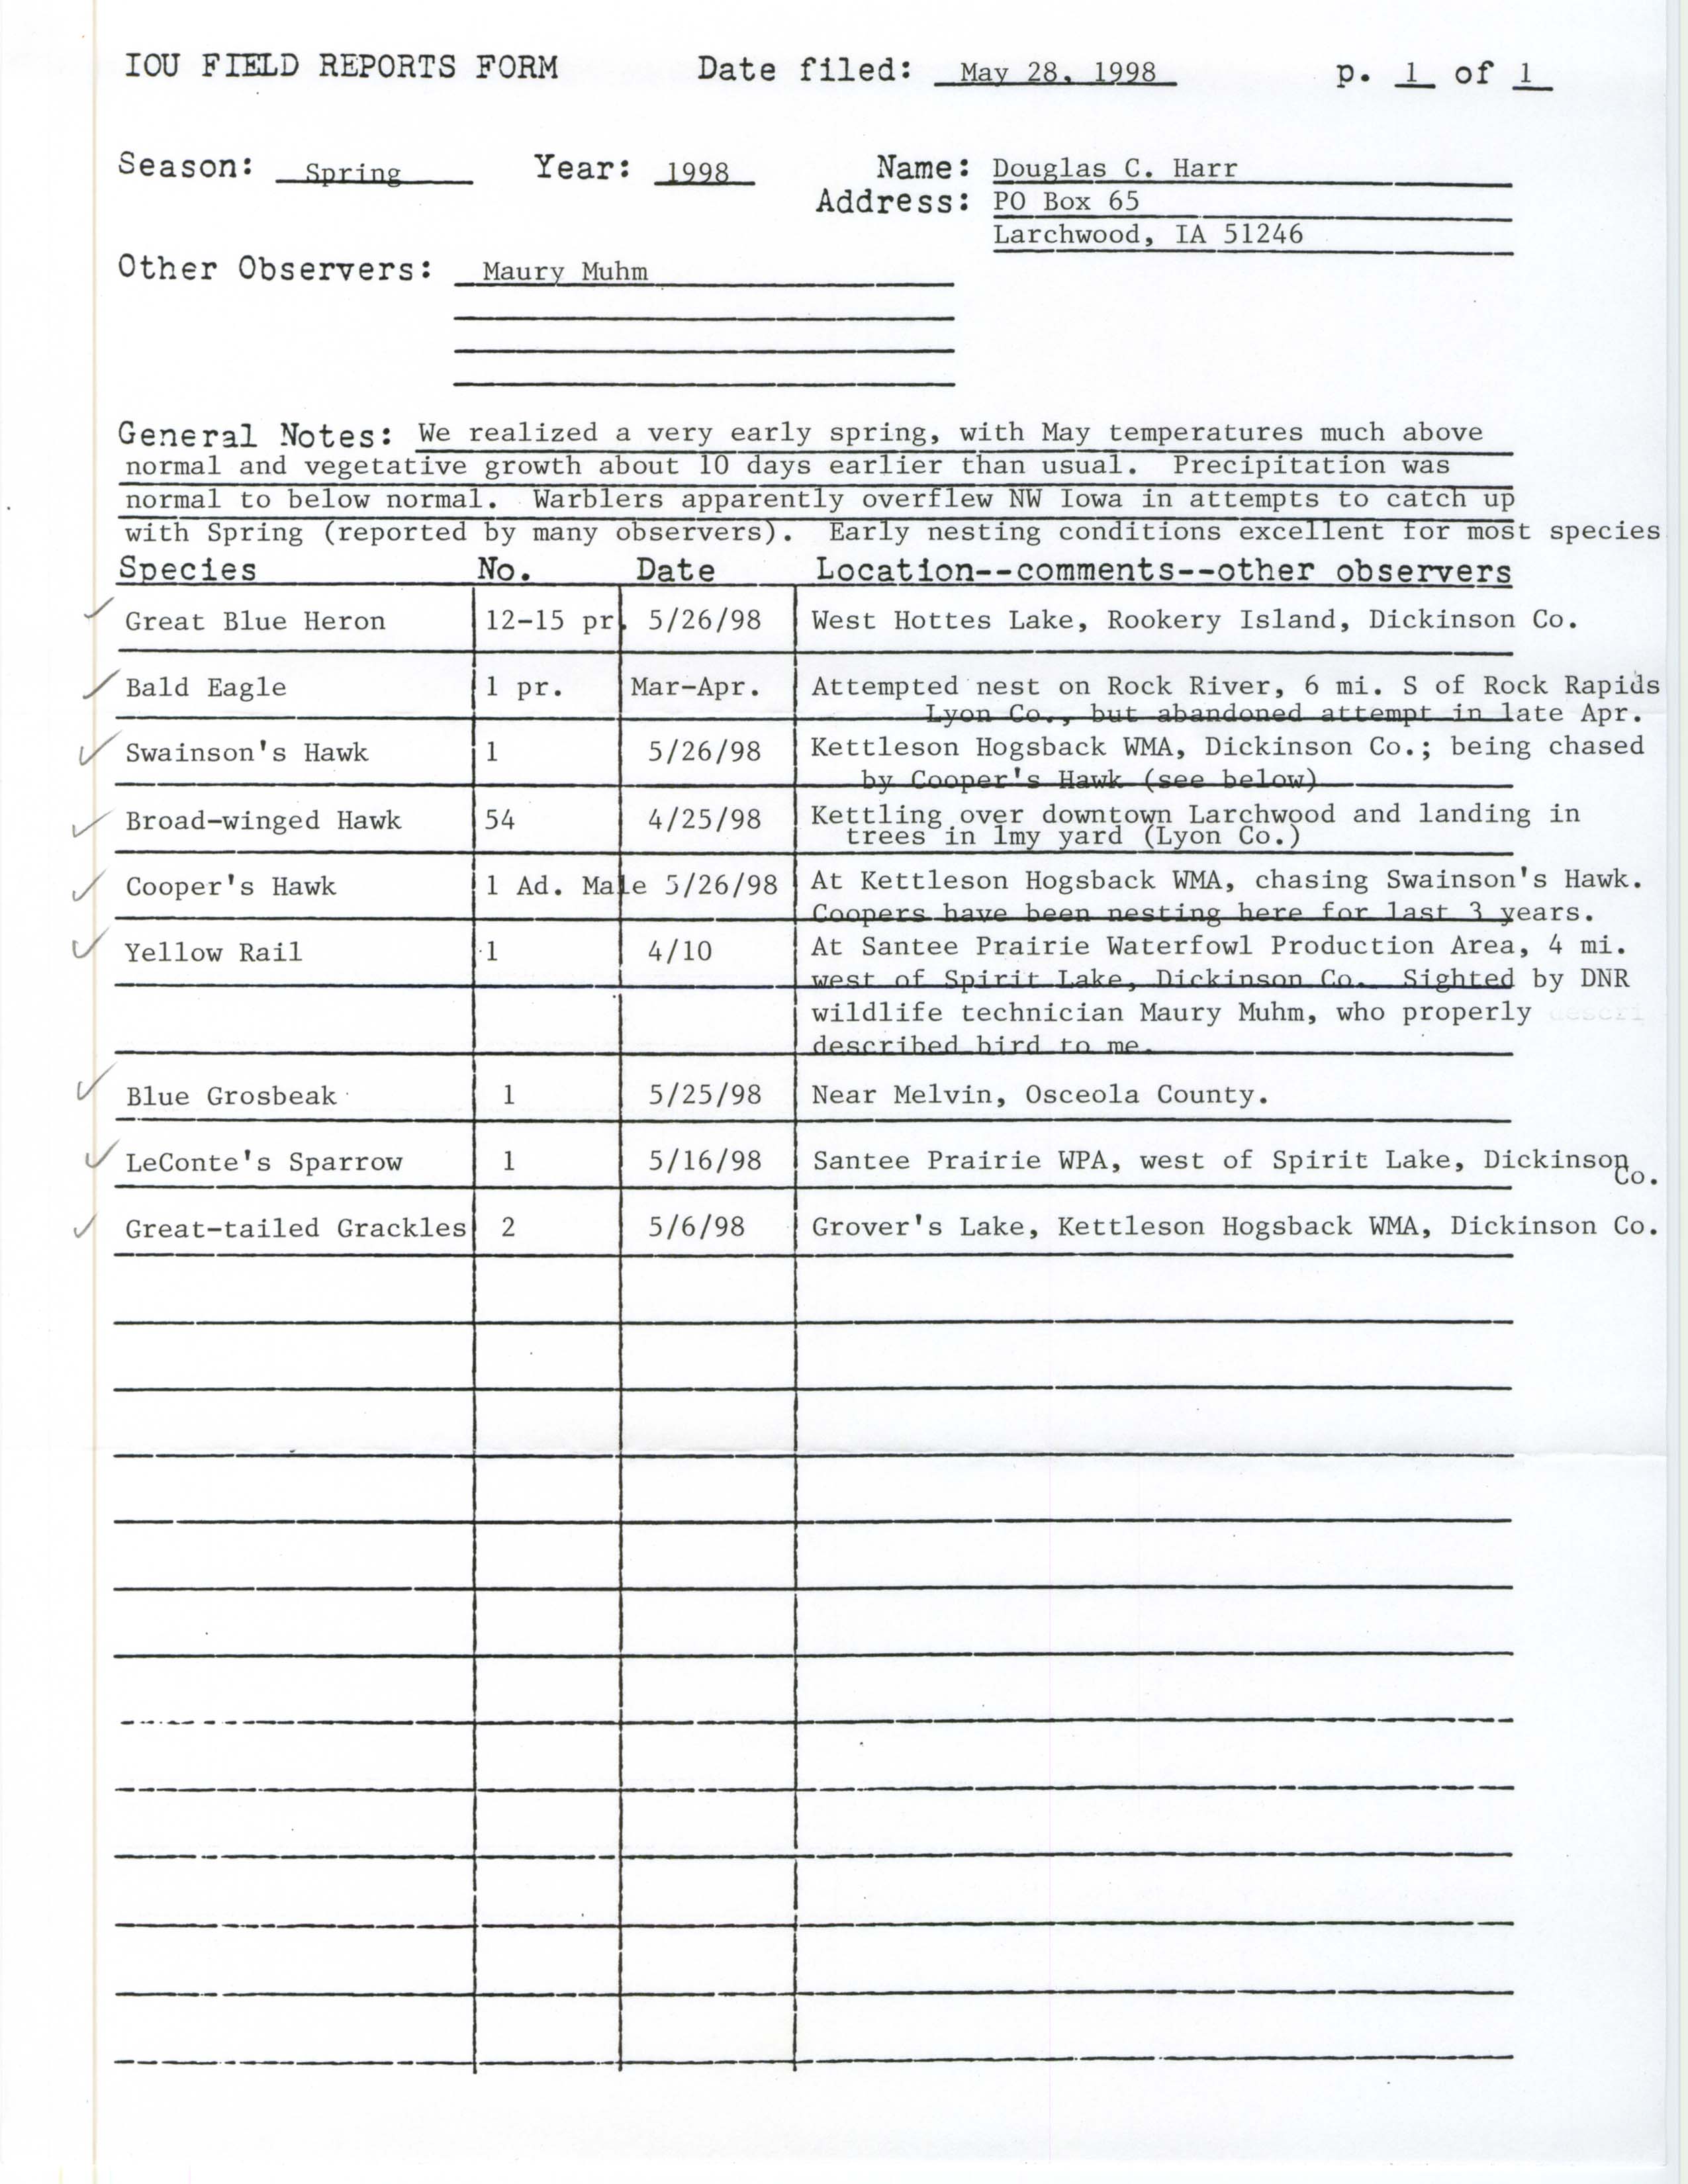 IOU field reports form, Douglas Harr, May 28, 1998